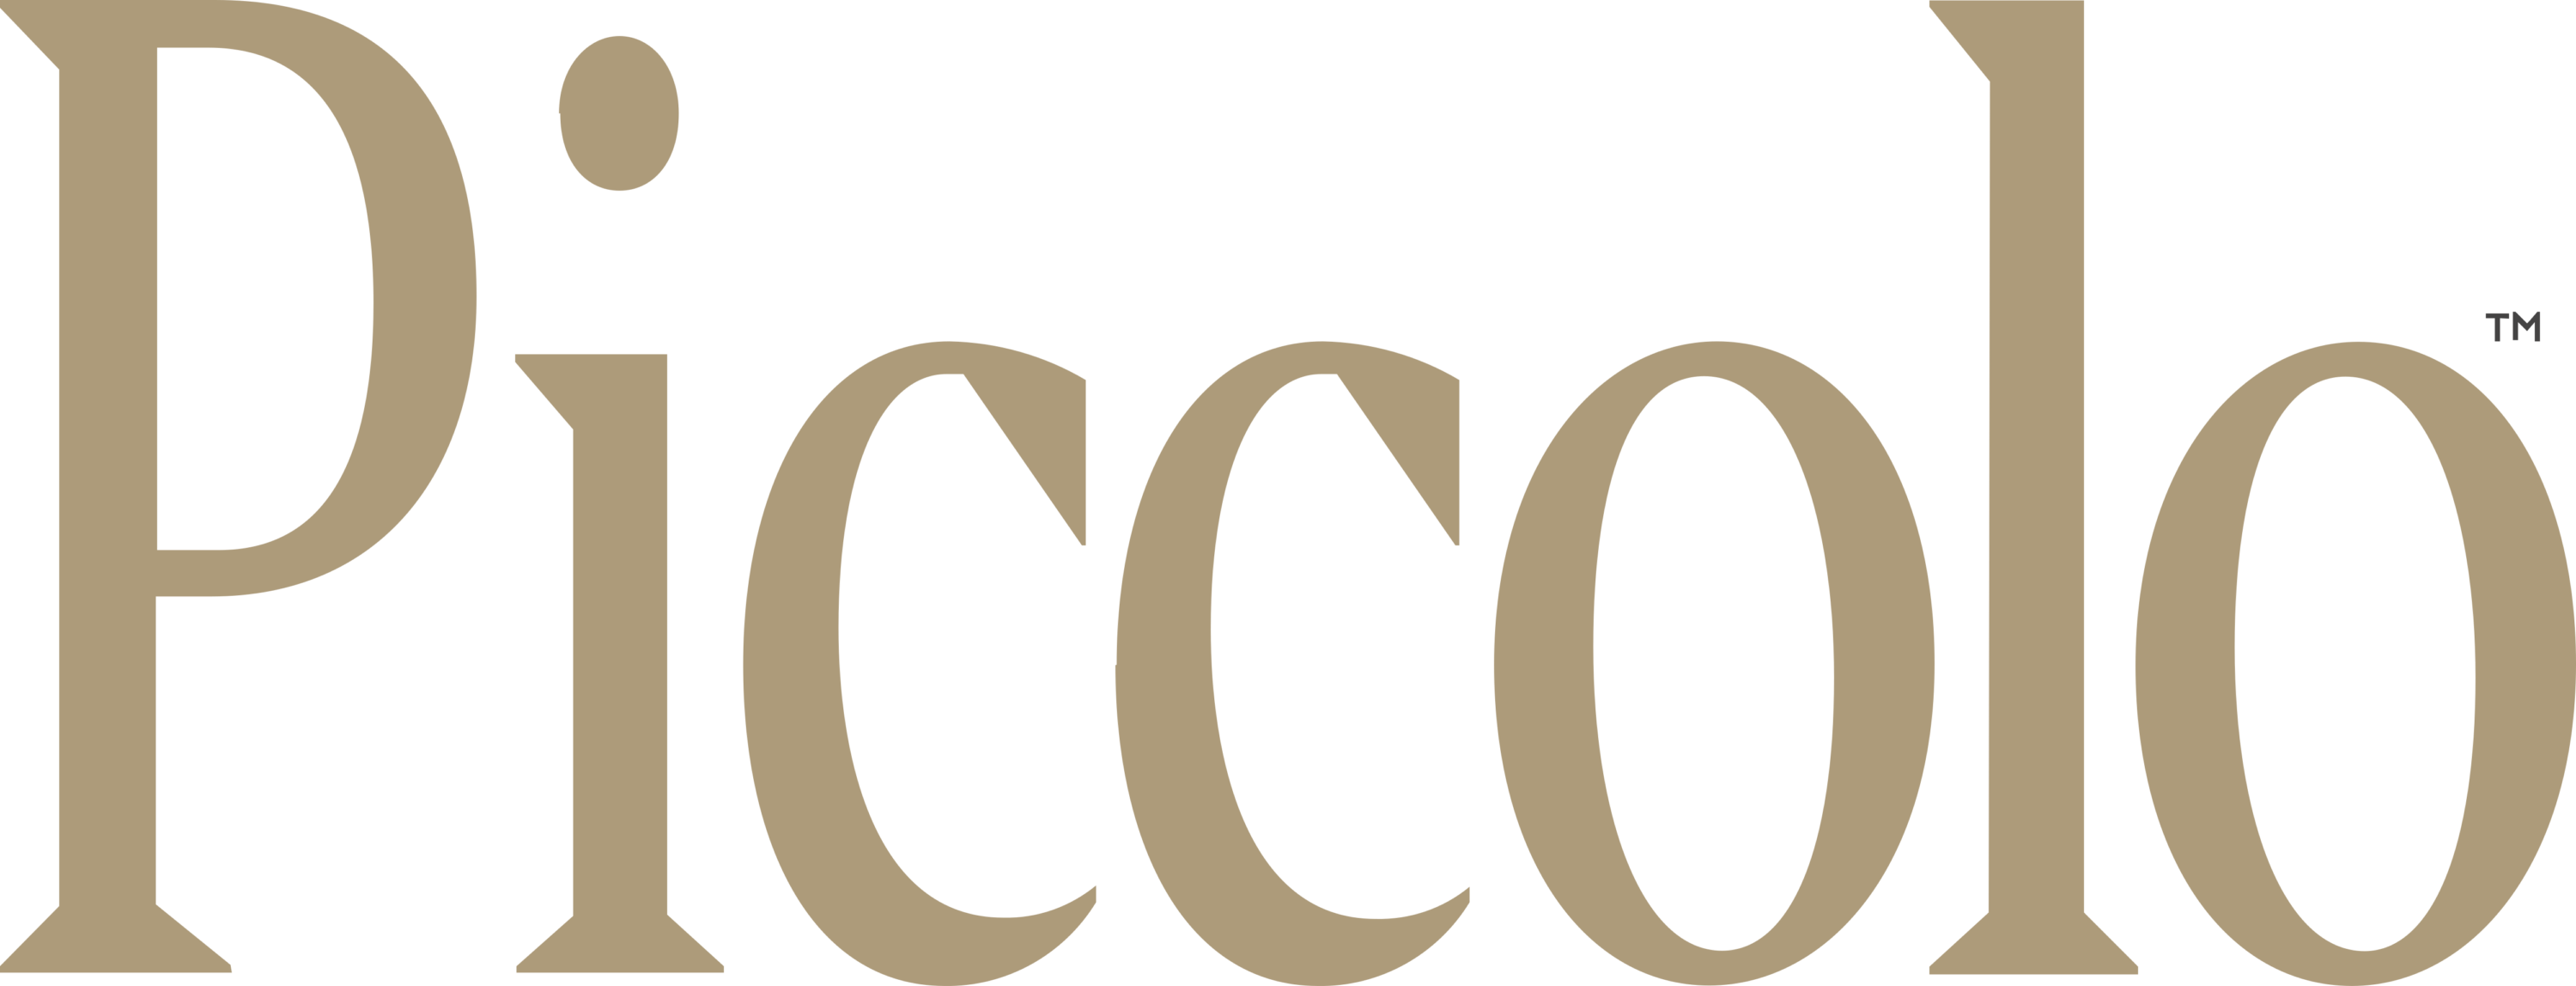 Piccolo Pet Food Logo